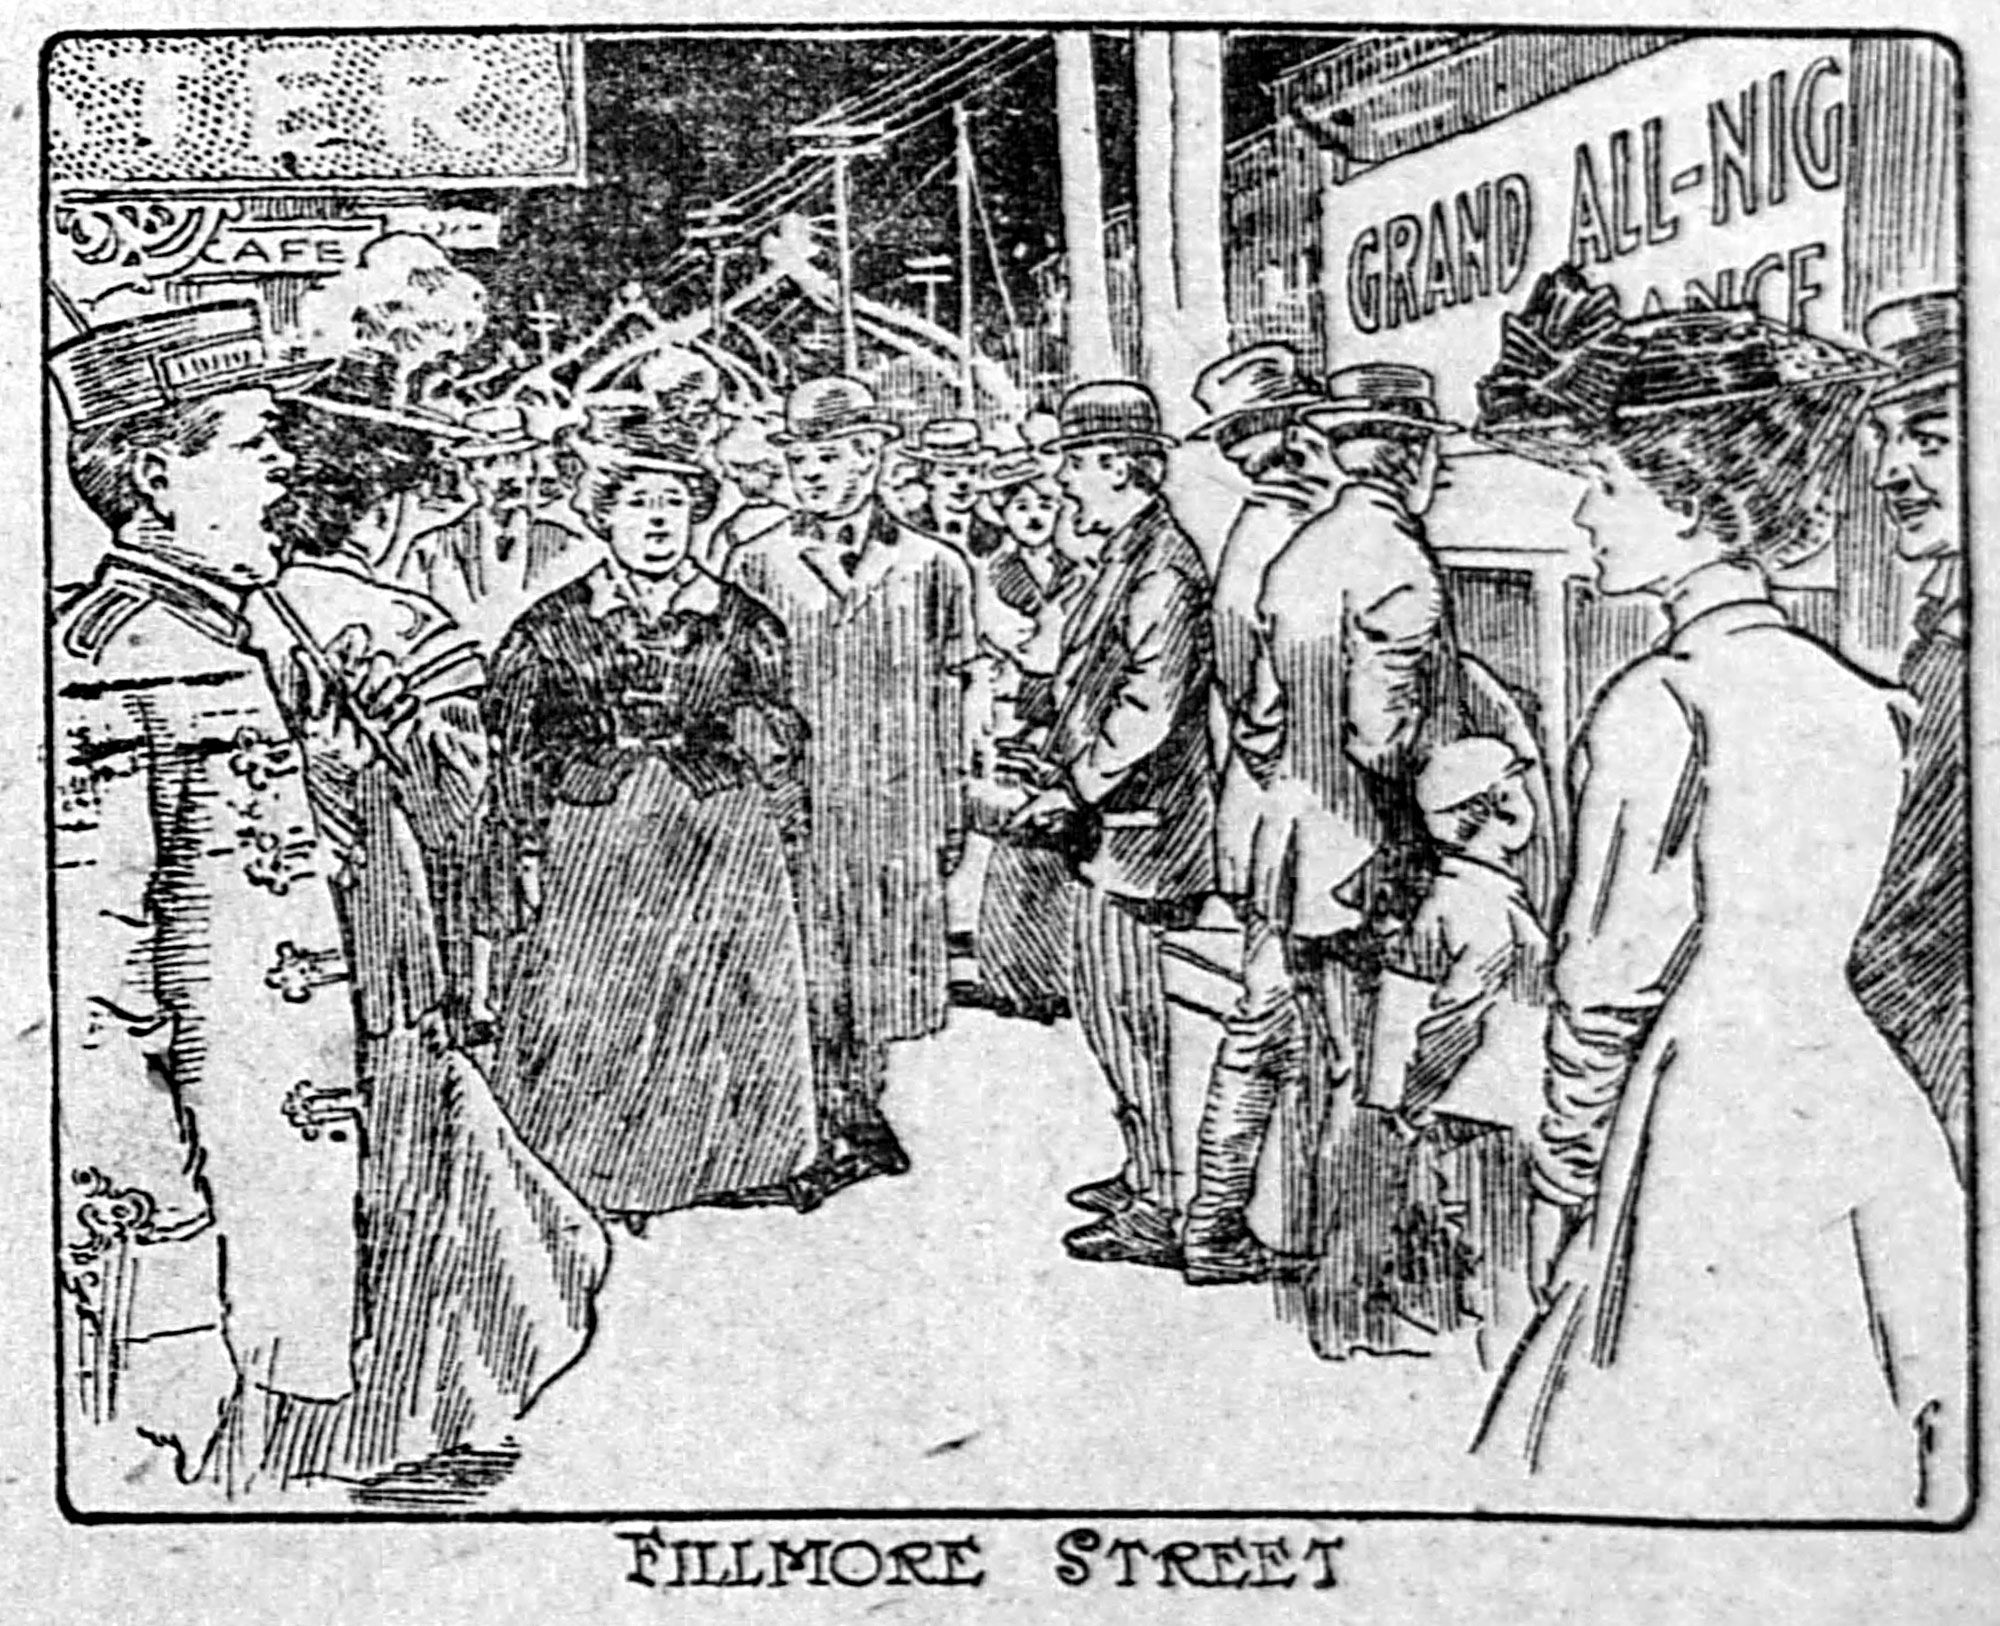 1908 newspaper illustration of crowds on Fillmore Street